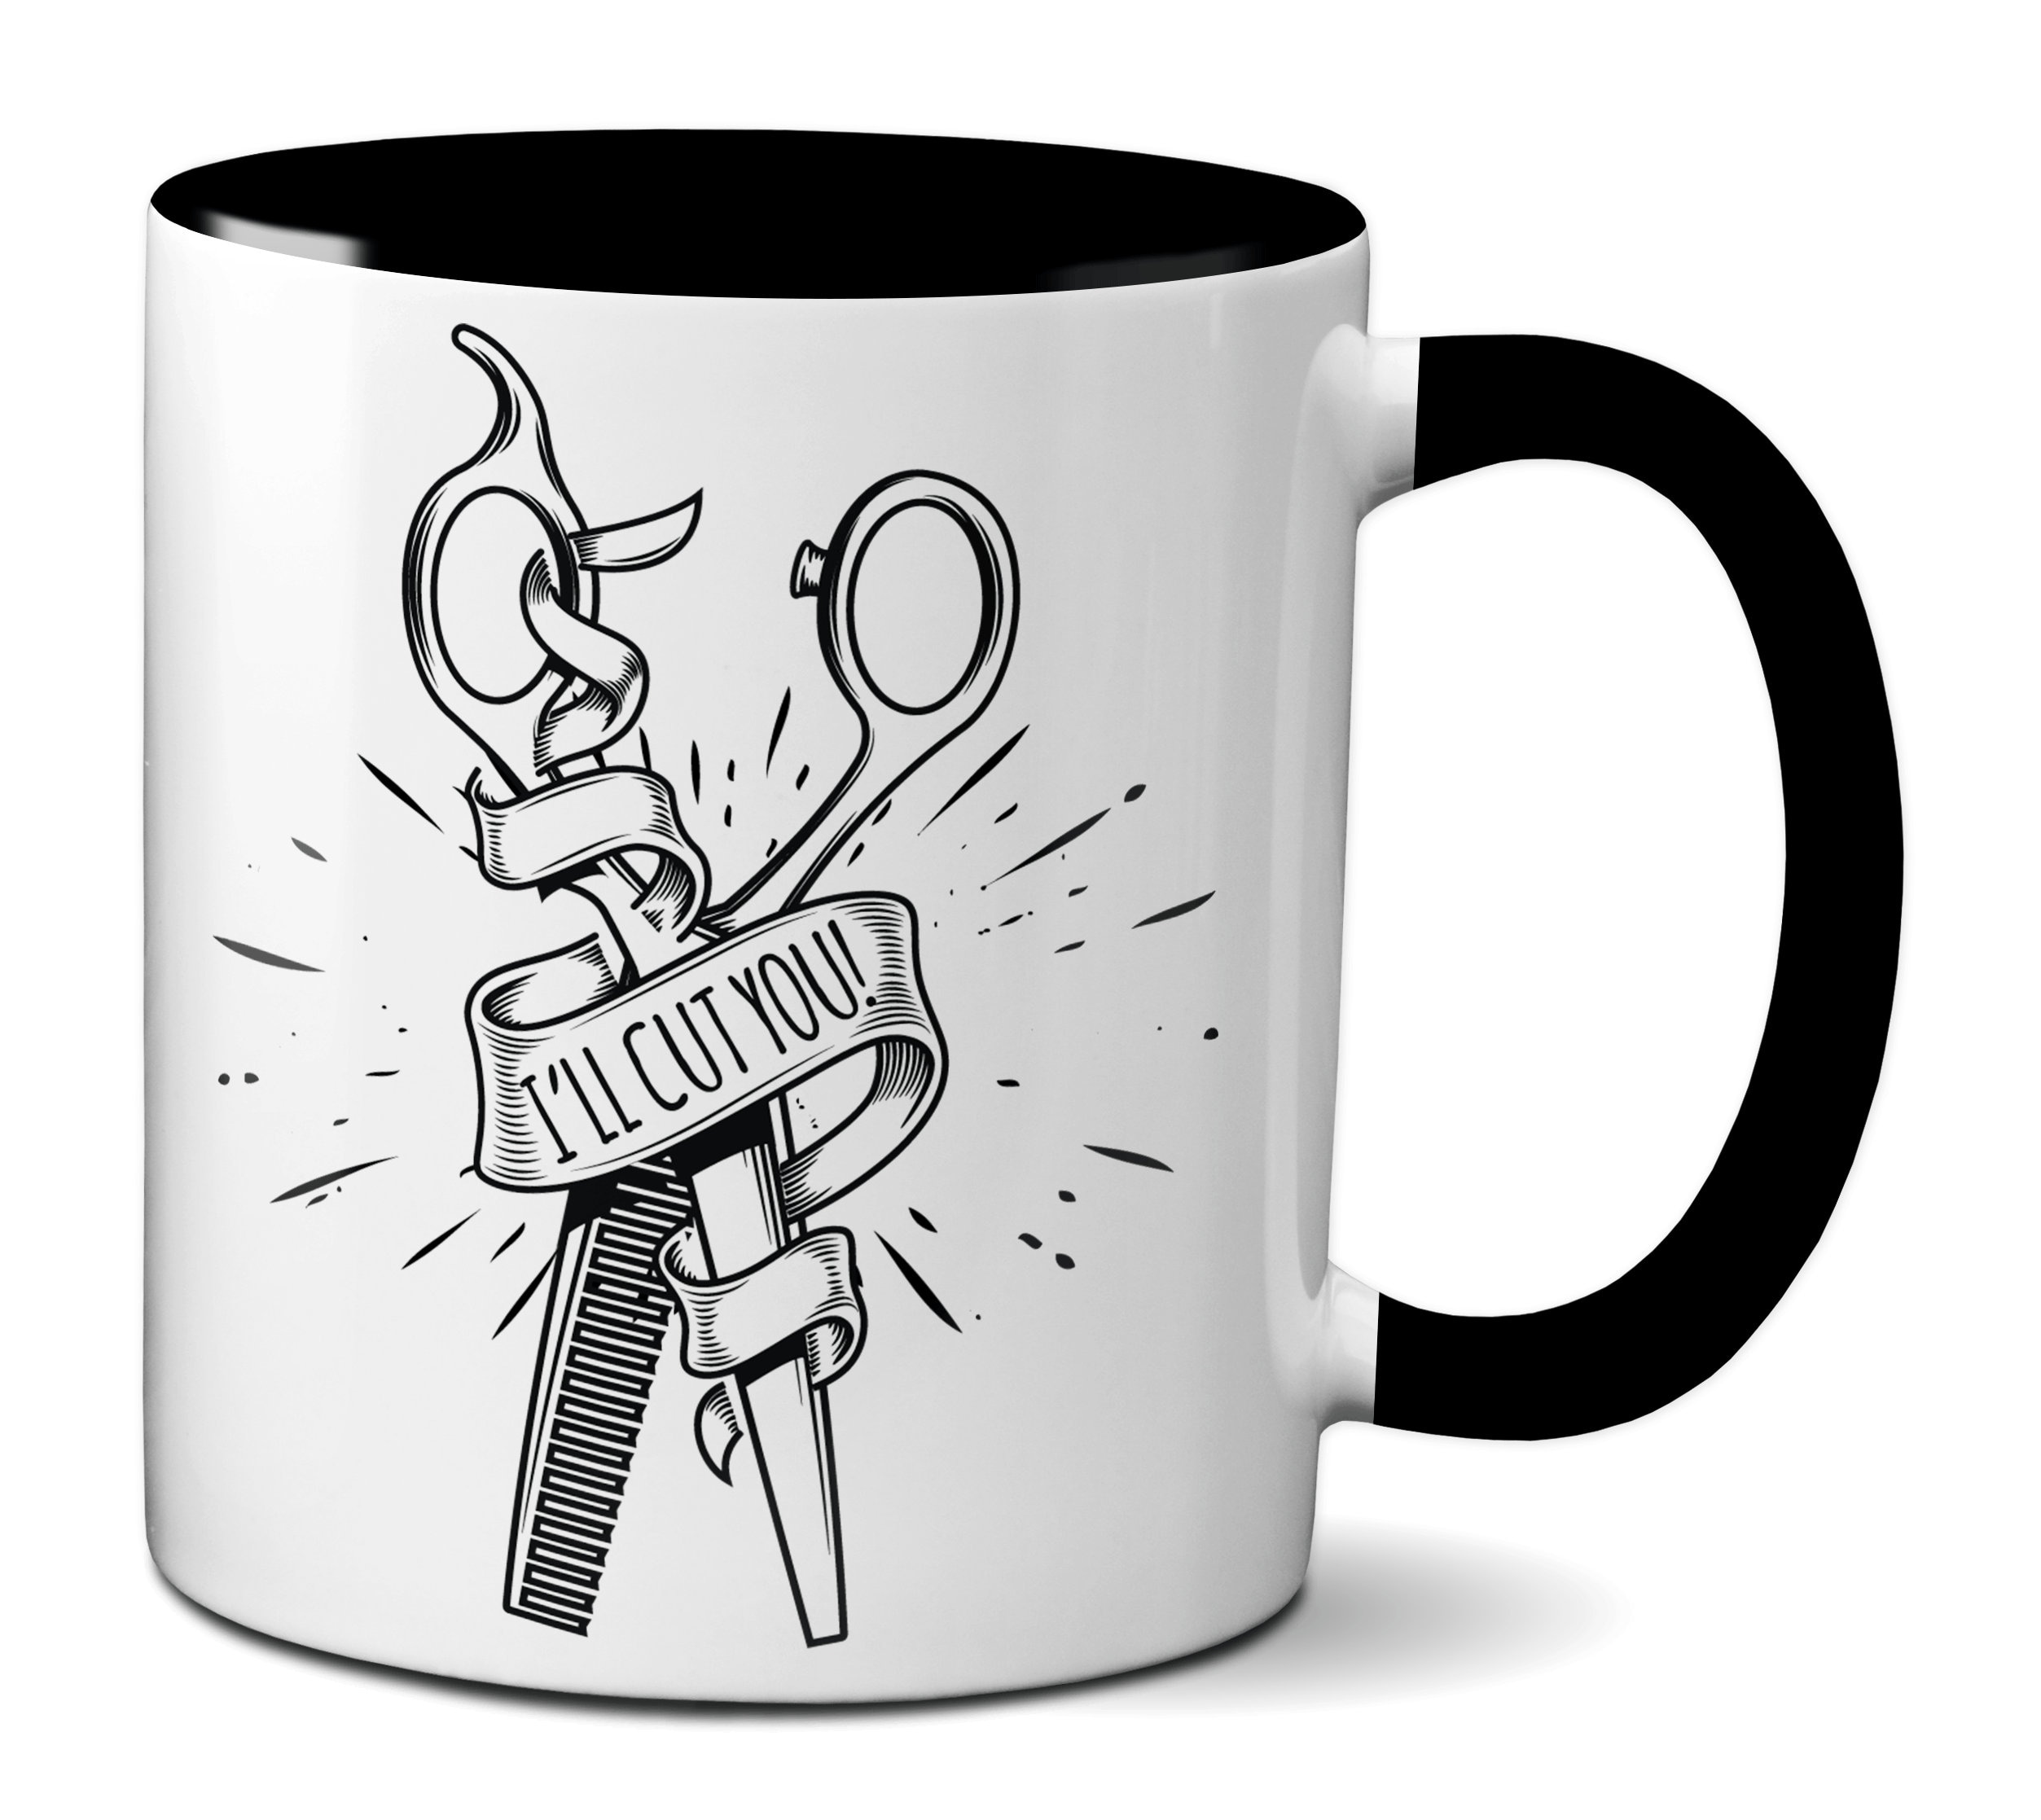 Fierce Coffee Mug for The Feisty Barber 